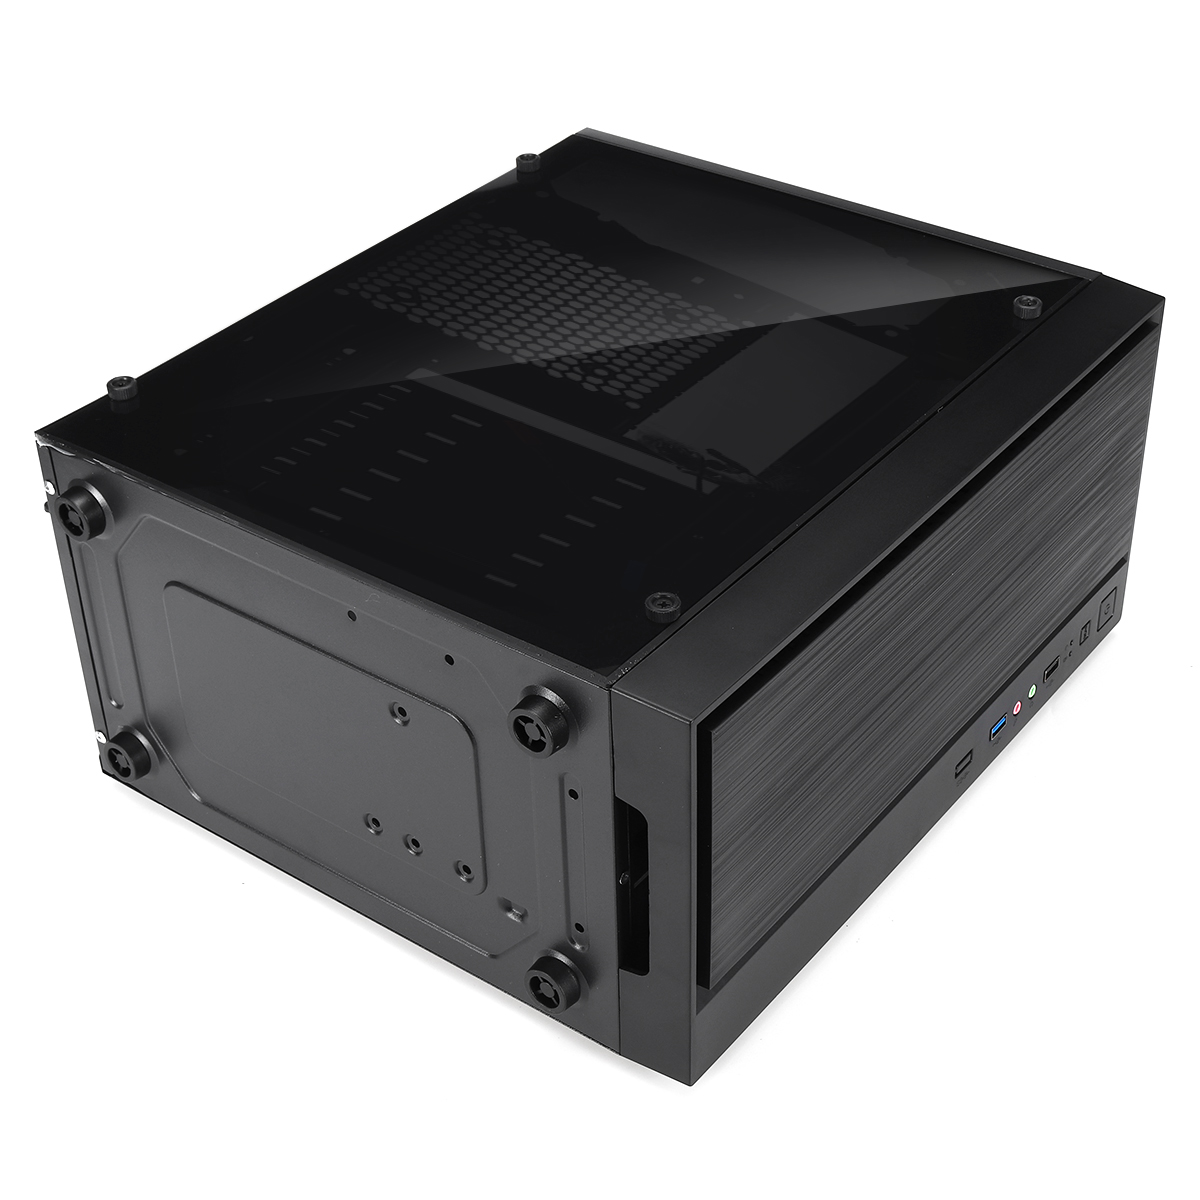 M-ATX--Mini-ITX-Computer-Gaming-PC-Case-RGB-Cooling-Fan-USB-Audio-Interface-with-Light-Bar-1627169-2